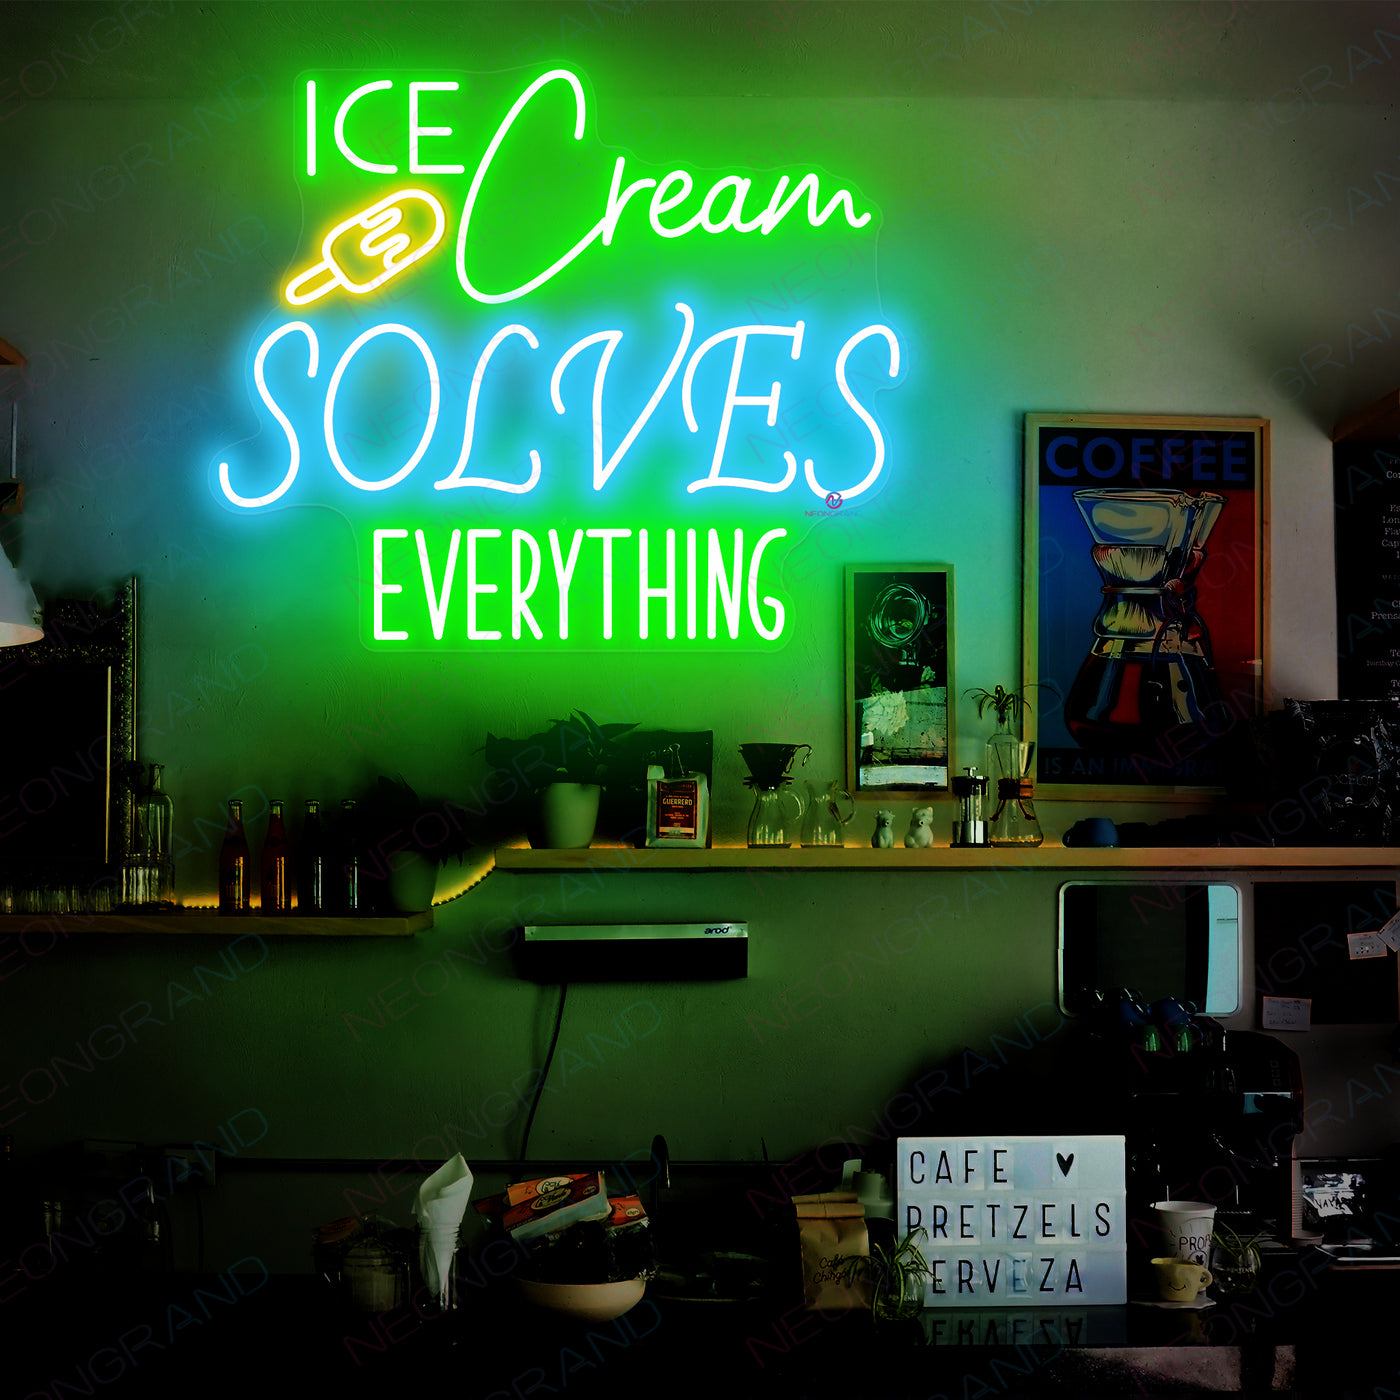 Ice Cream Solves Everything Neon Sign Led Light green